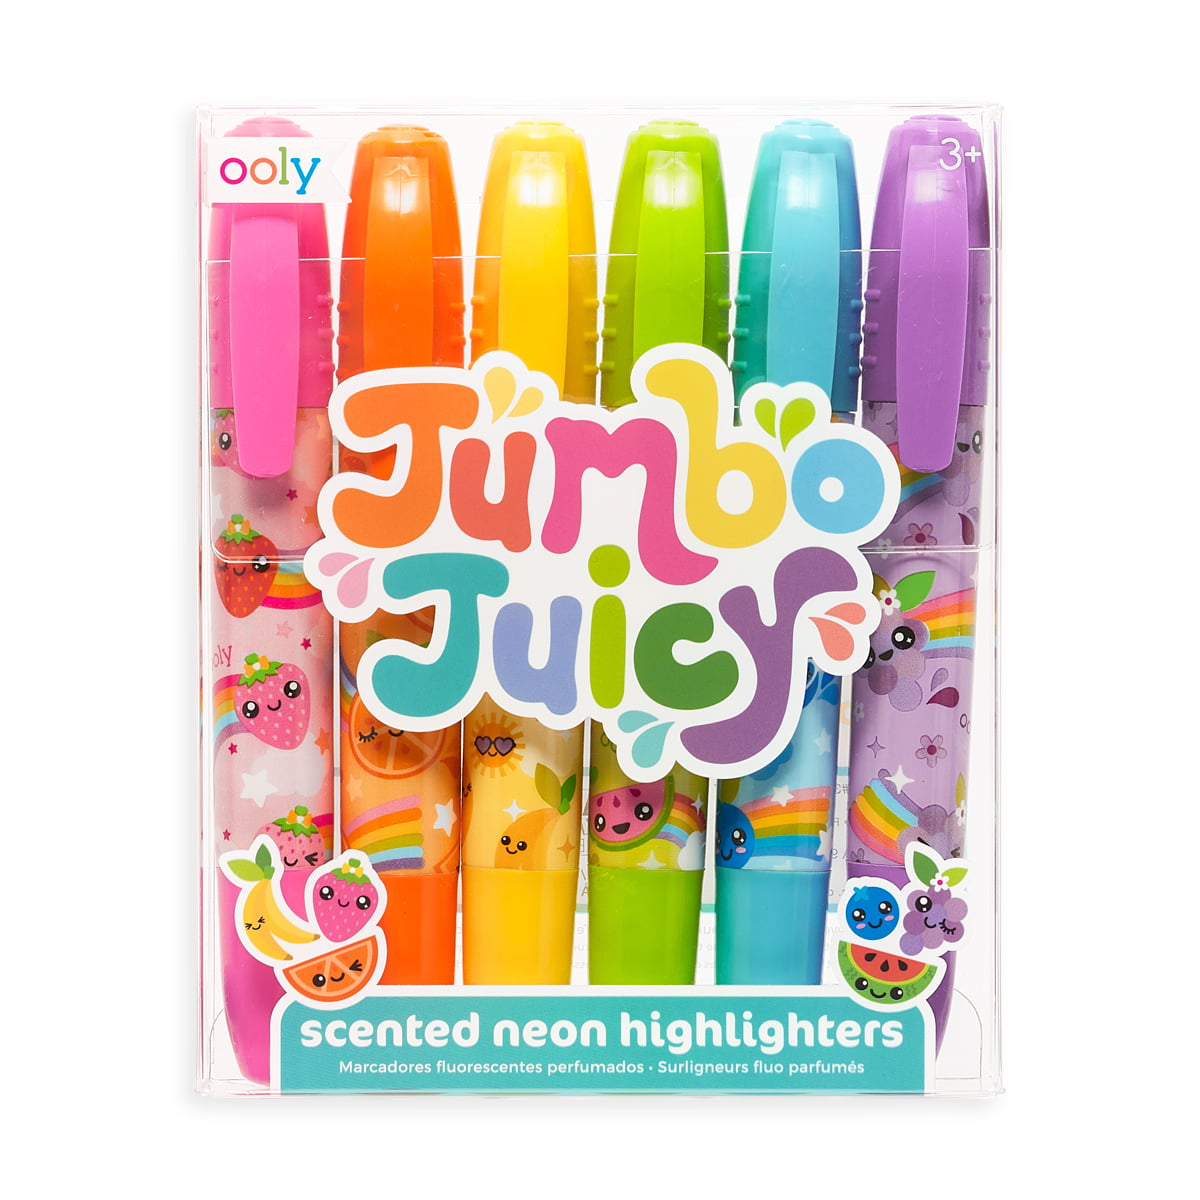 Jumbo Juicy Scented Markers